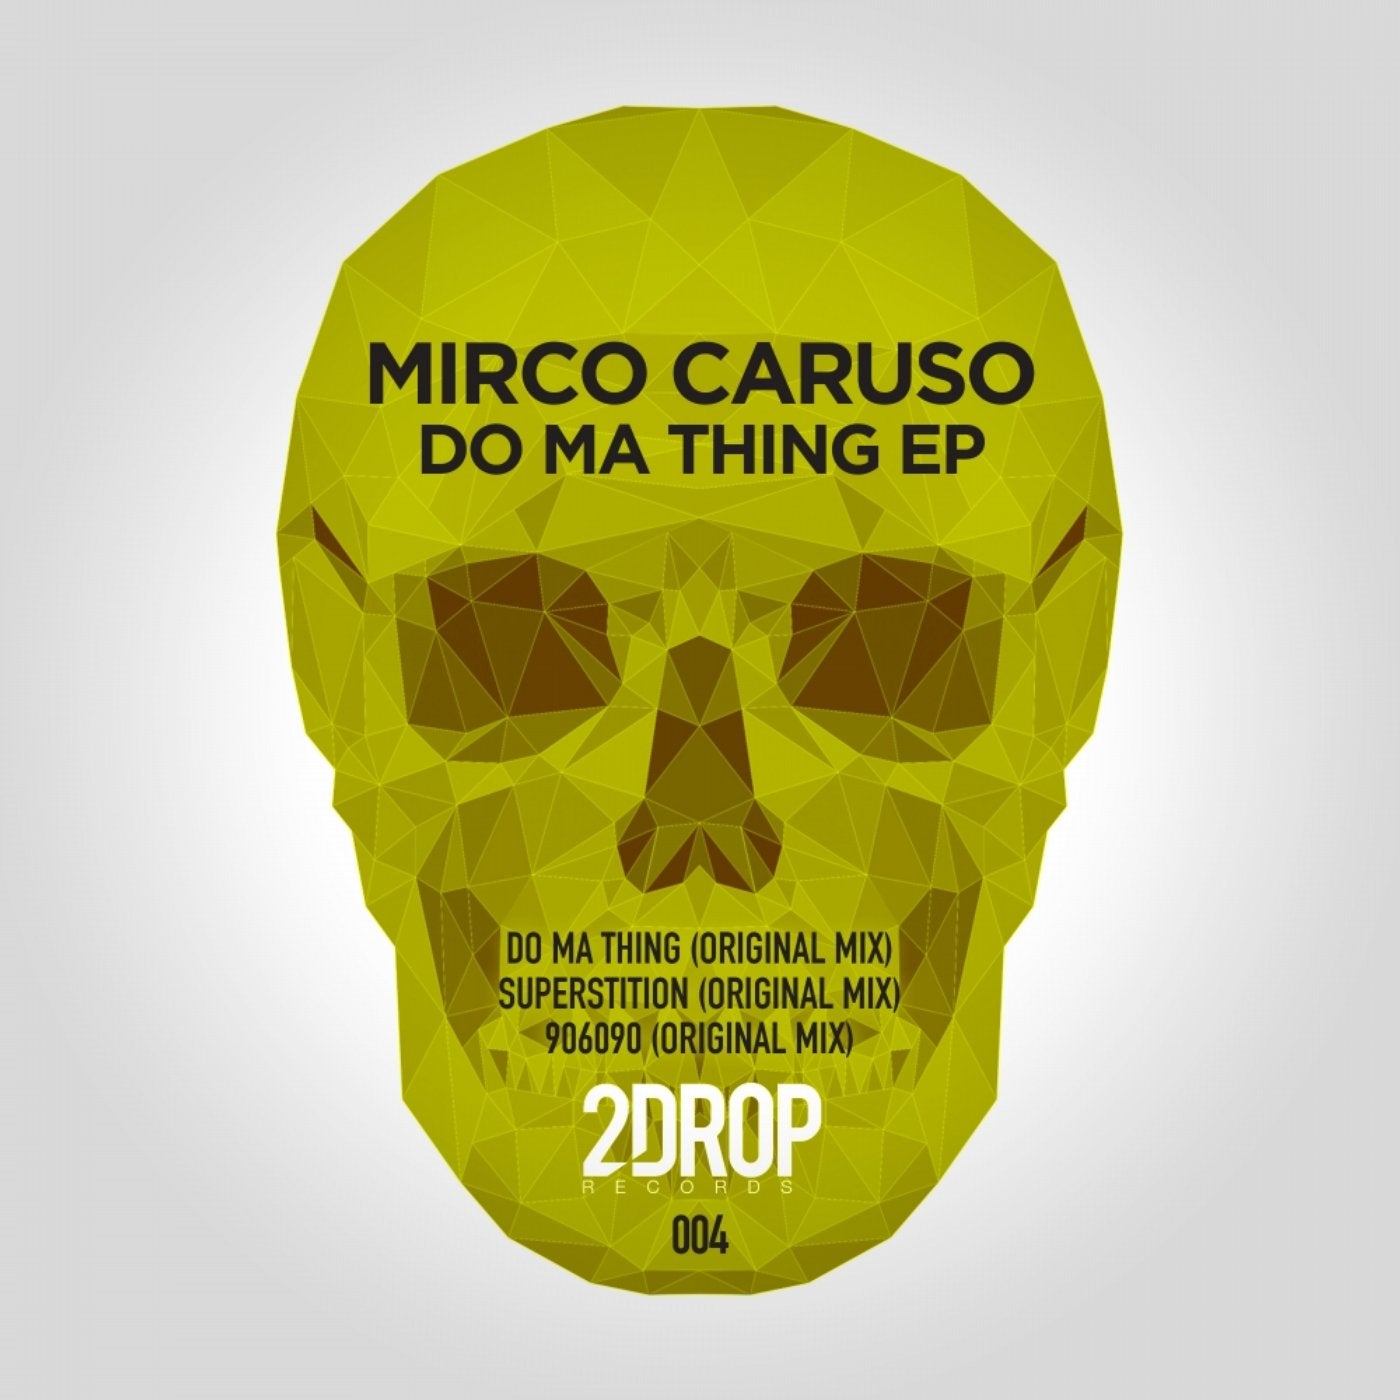 Original Mix. Original things. T+A Caruso. Keep Drop record.